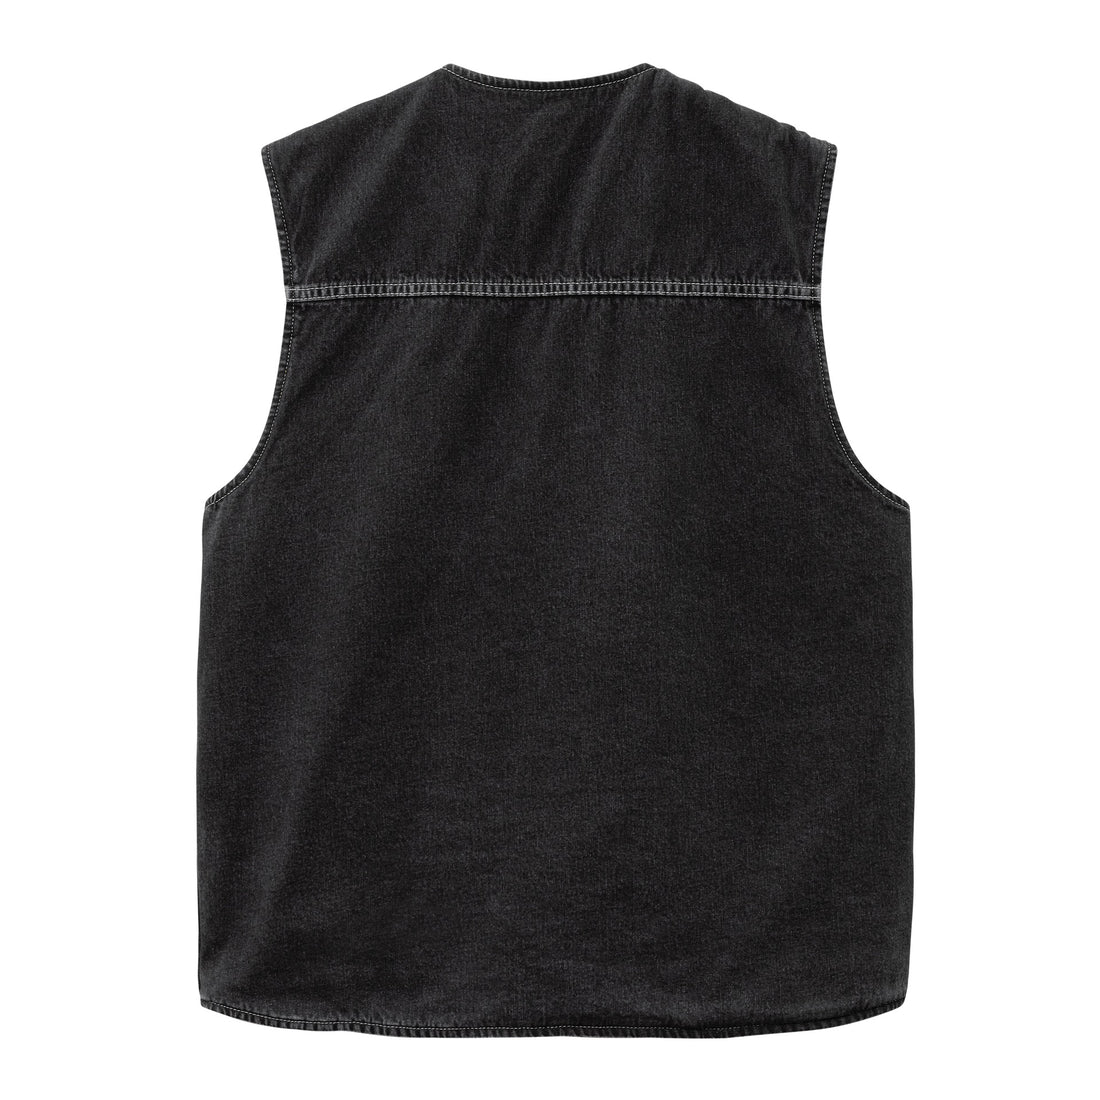 Carhartt WIP Chore Vest | Black (Stone Washed)